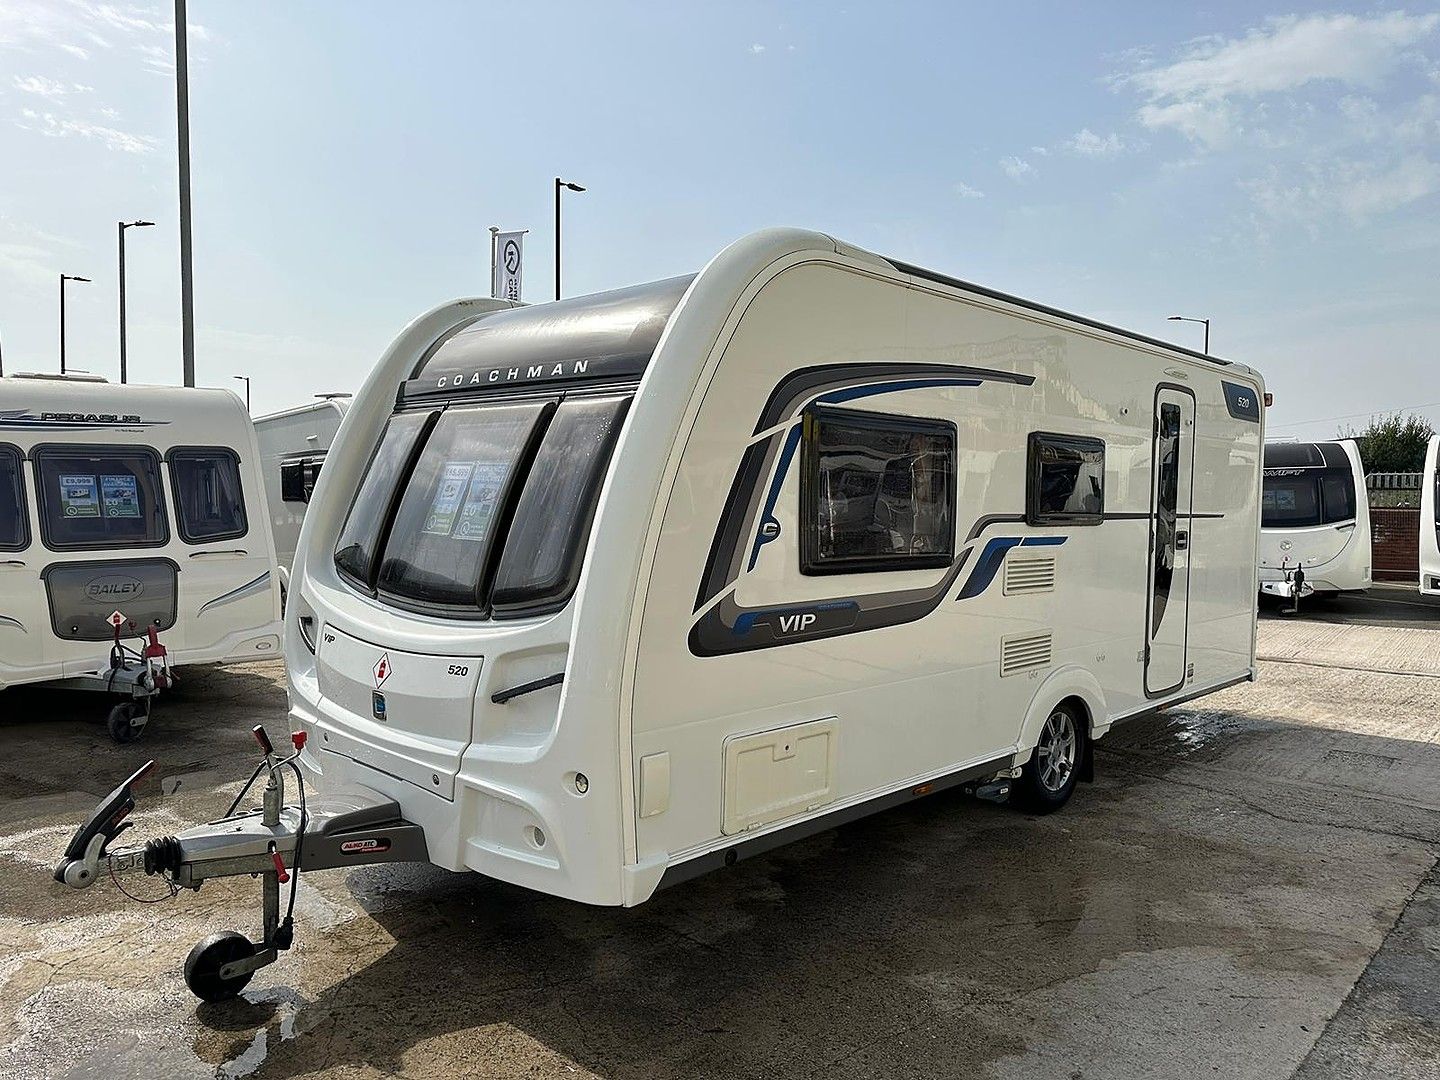 CoachmanVIP 520Touring Caravan for sale